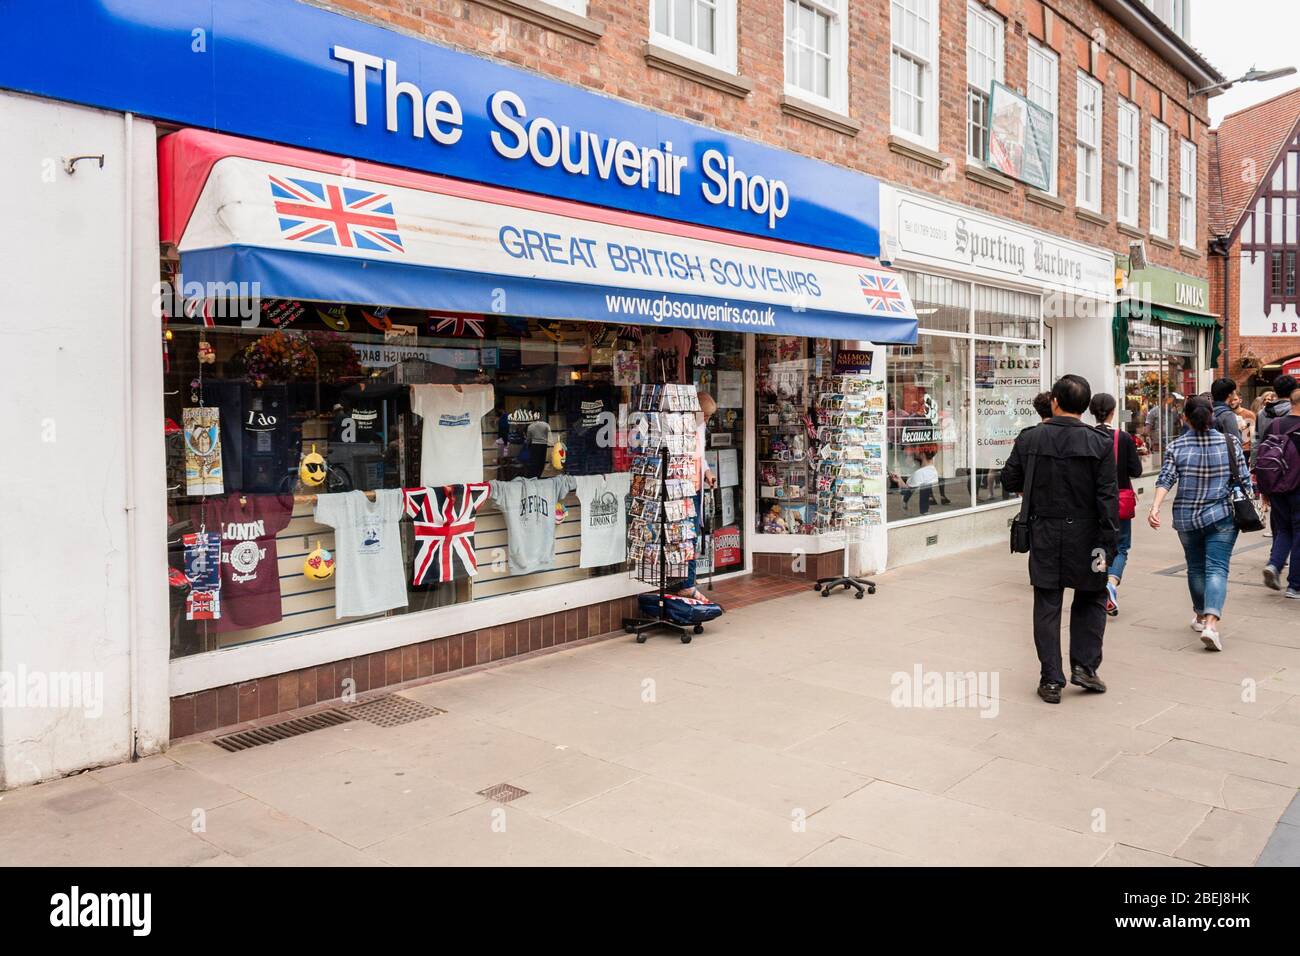 Souvenir shop on street in Stratford upon Avon, England, GB, UK Stock Photo